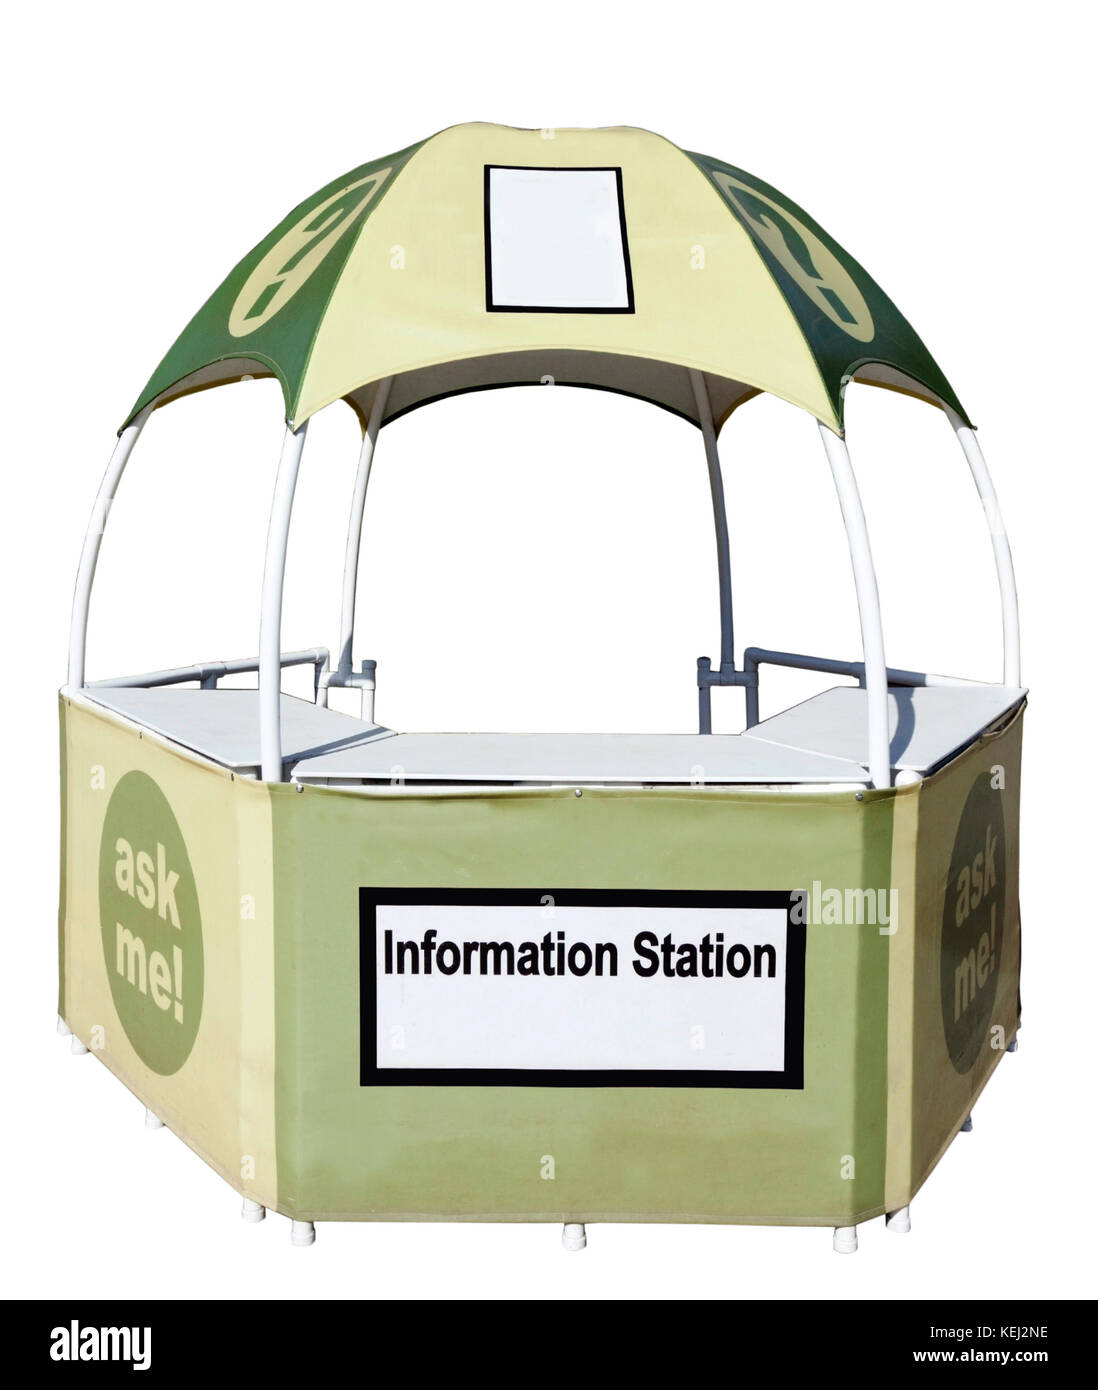 Tented outdoor umbrella information kiosk. Isolated. Stock Photo